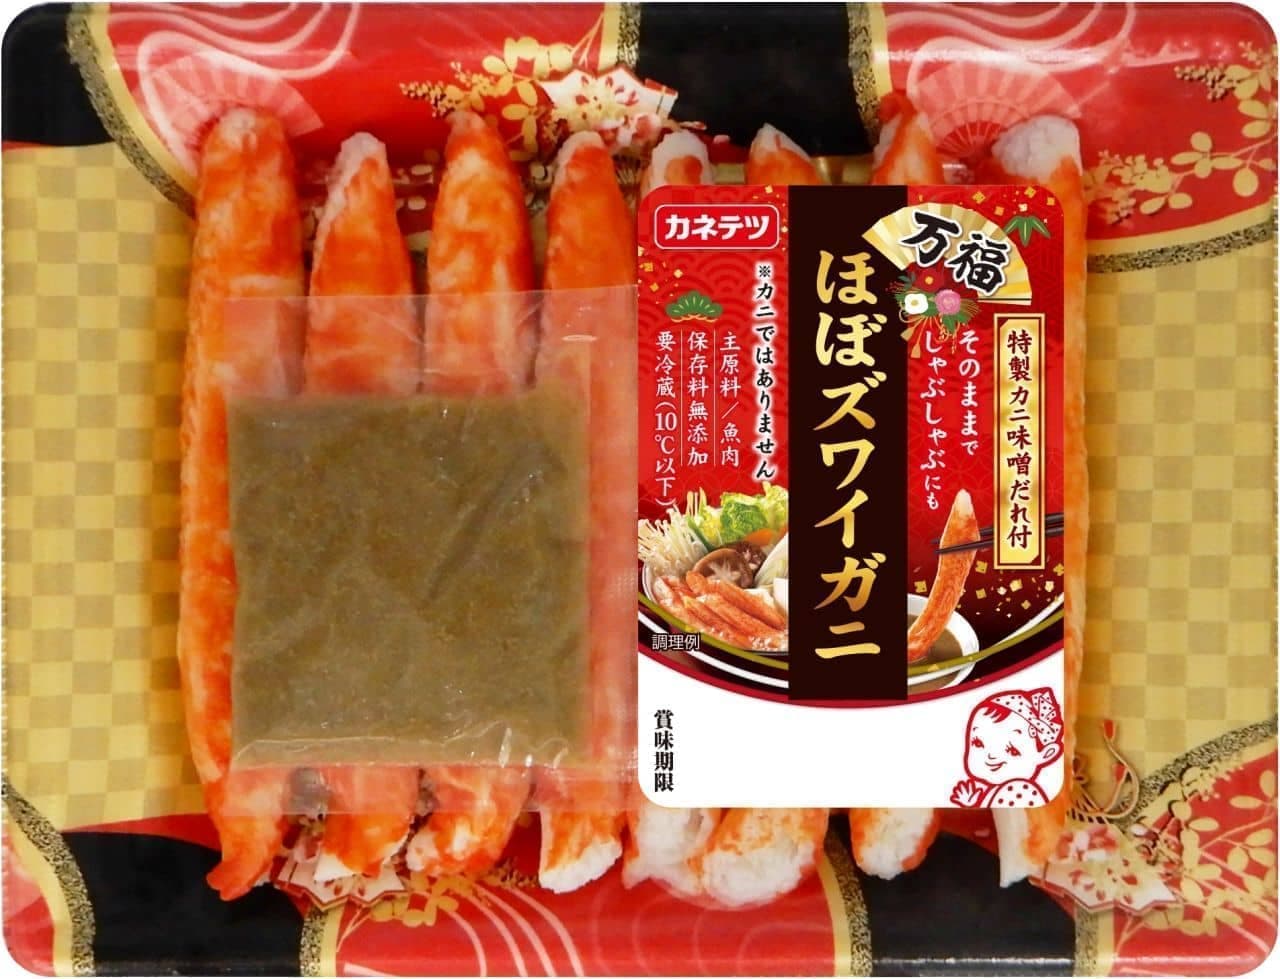 Kanetsu Delica Foods "Manfuku Almost Snow Crab"